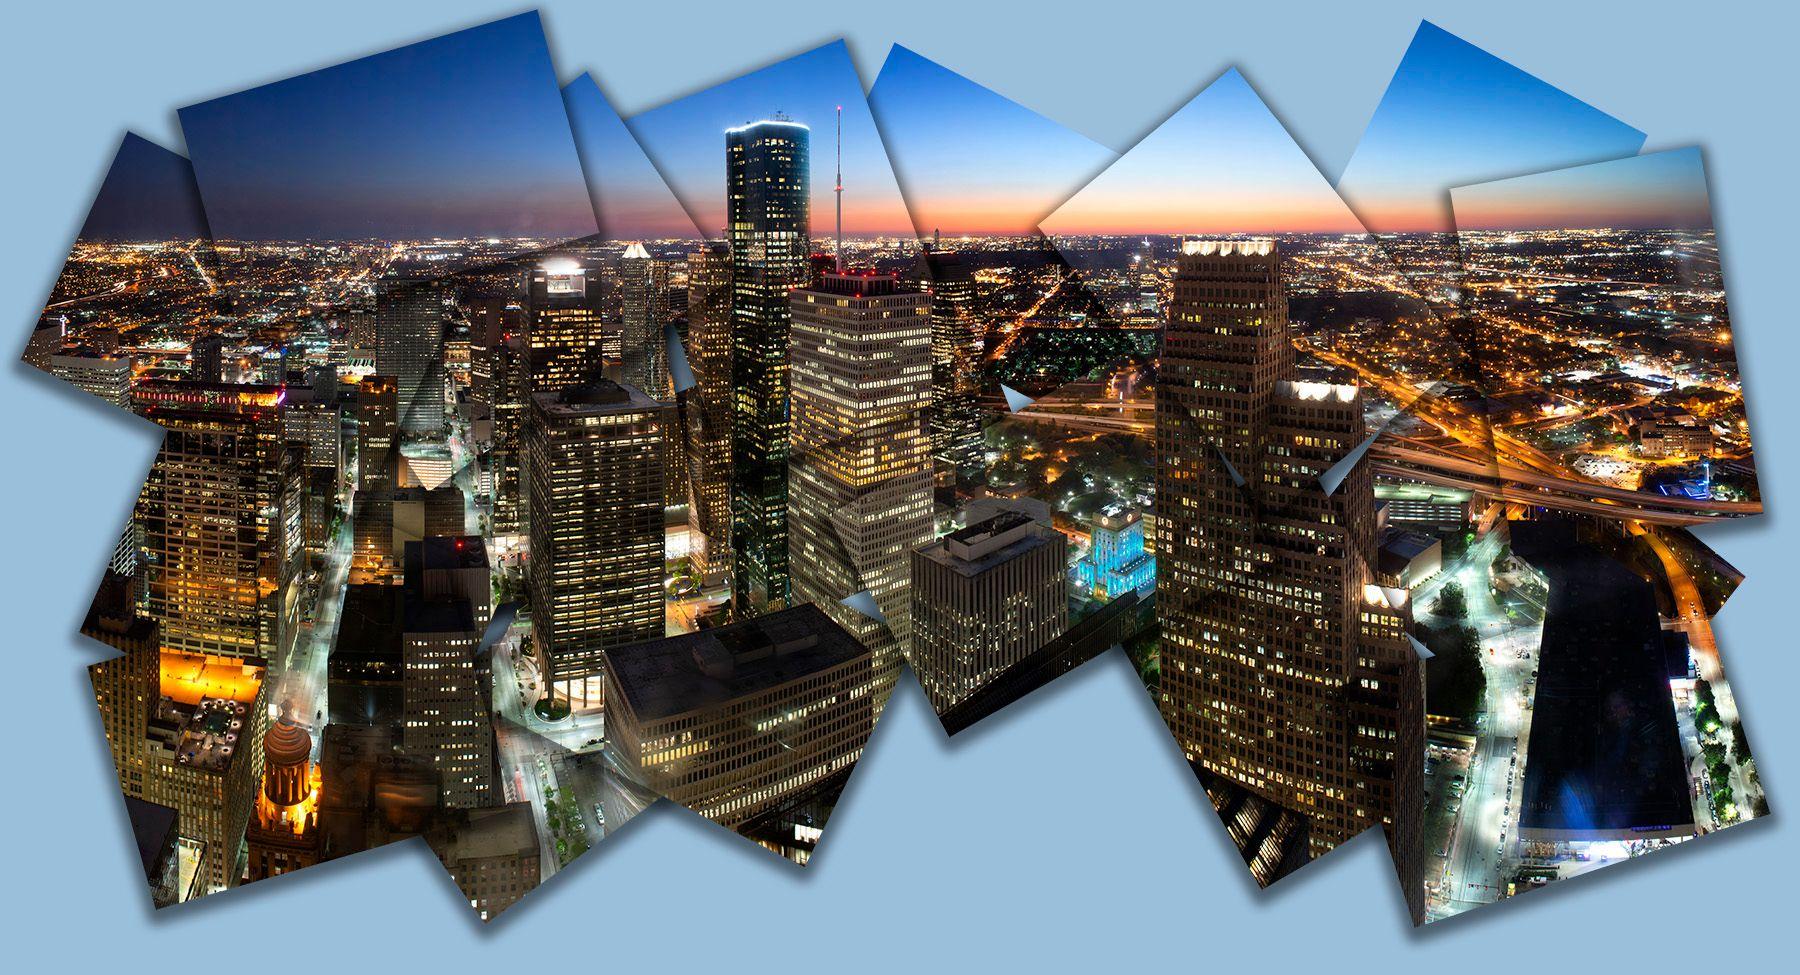 Joe Aker Color Photograph - City Lights - Downtown Houston skyscraper sunset light cityscape collage form